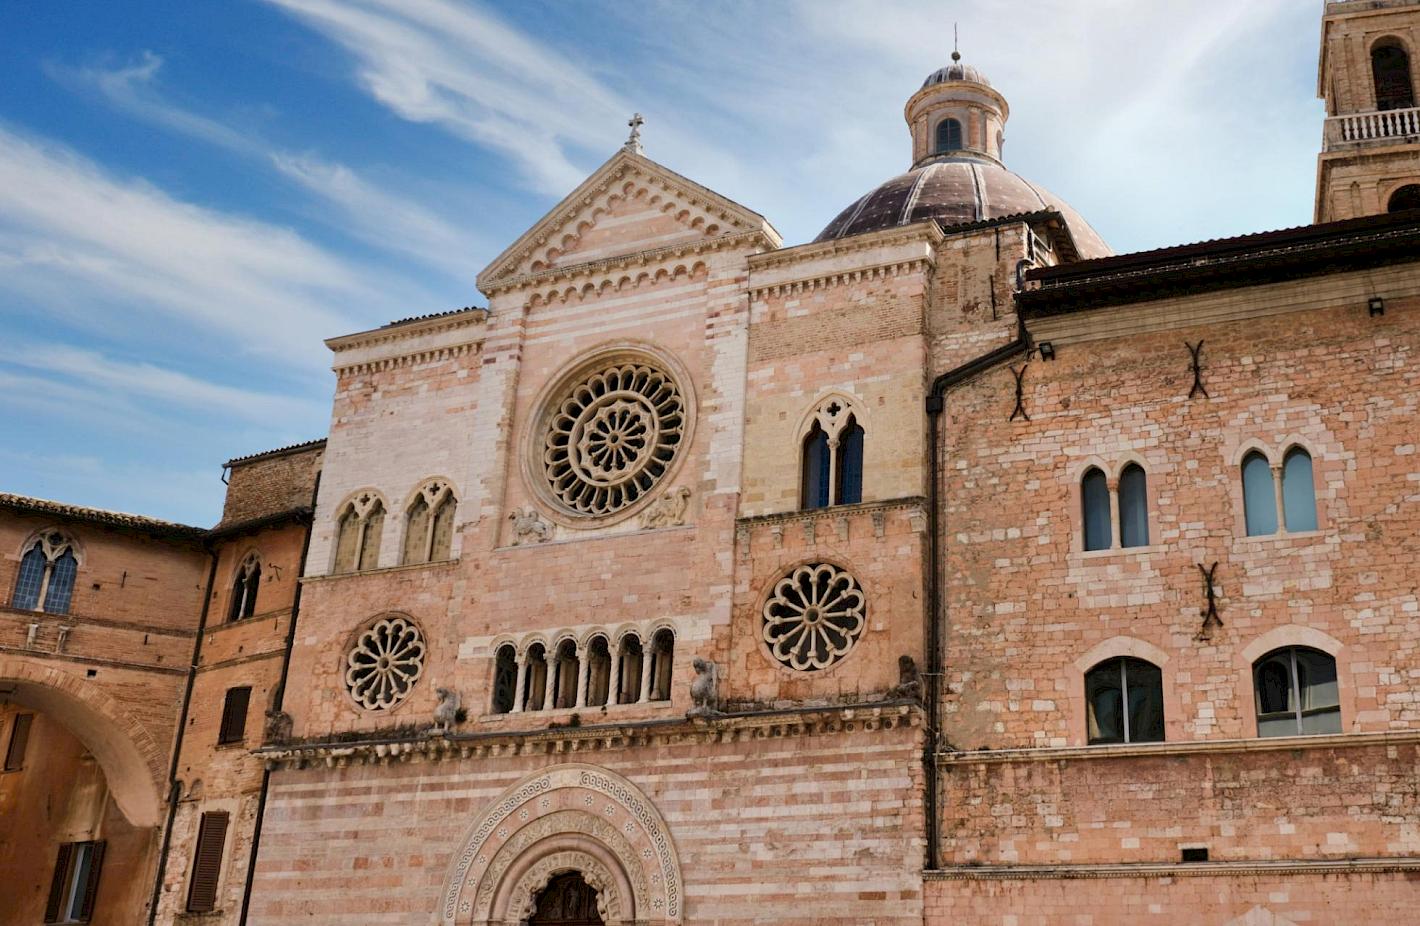 Cathedral in Foligno